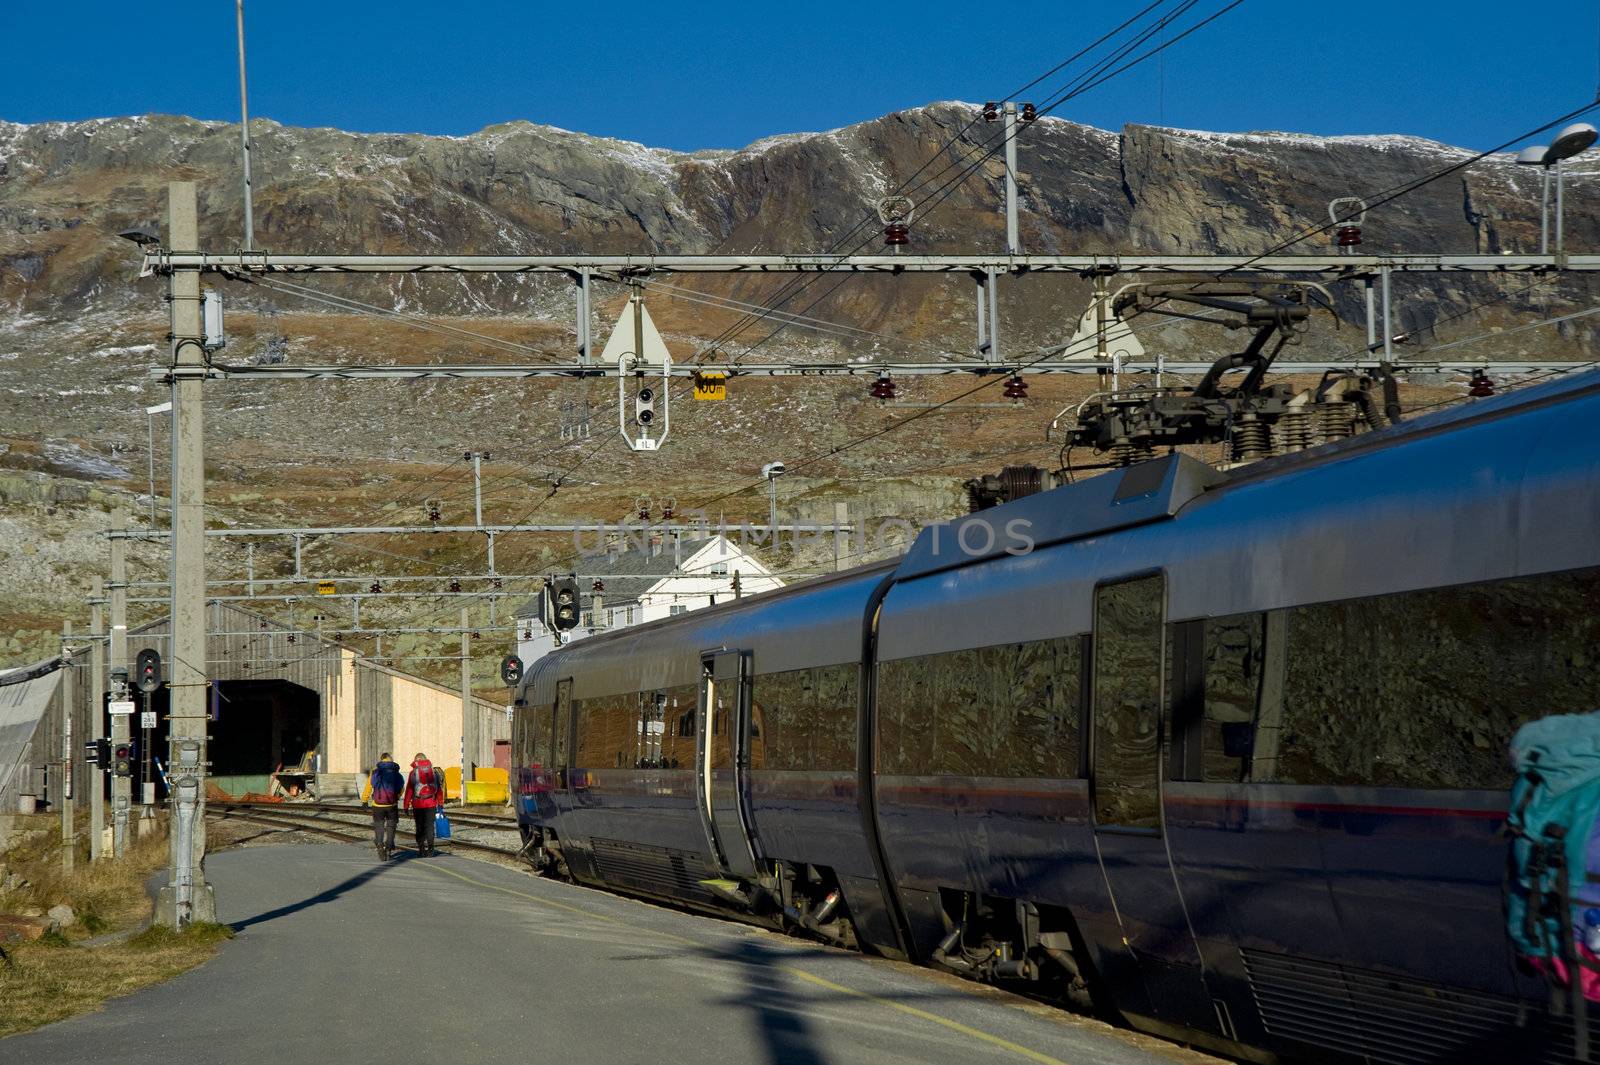 Railway station in Norway taken on October 2010